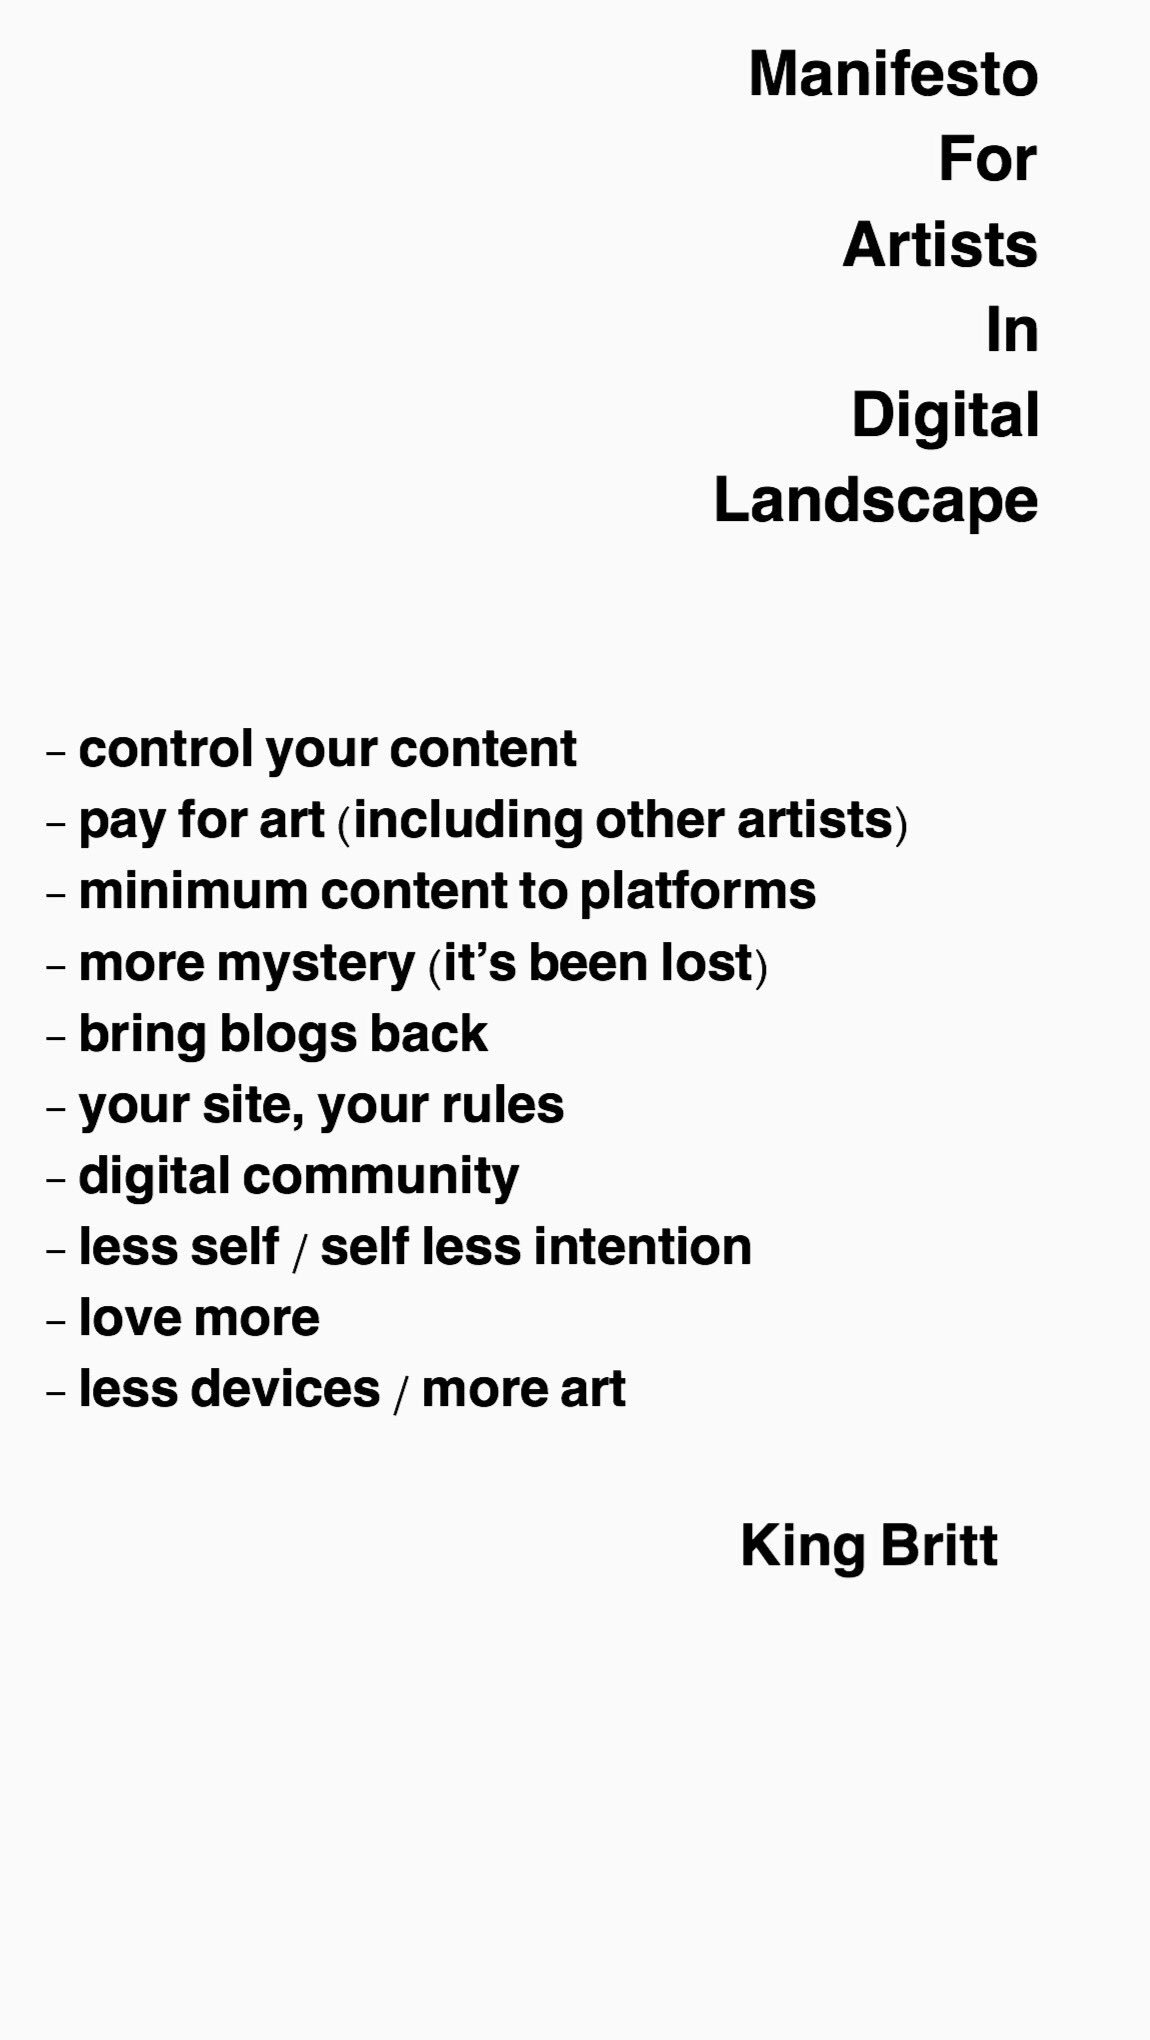 King Britt manifesto